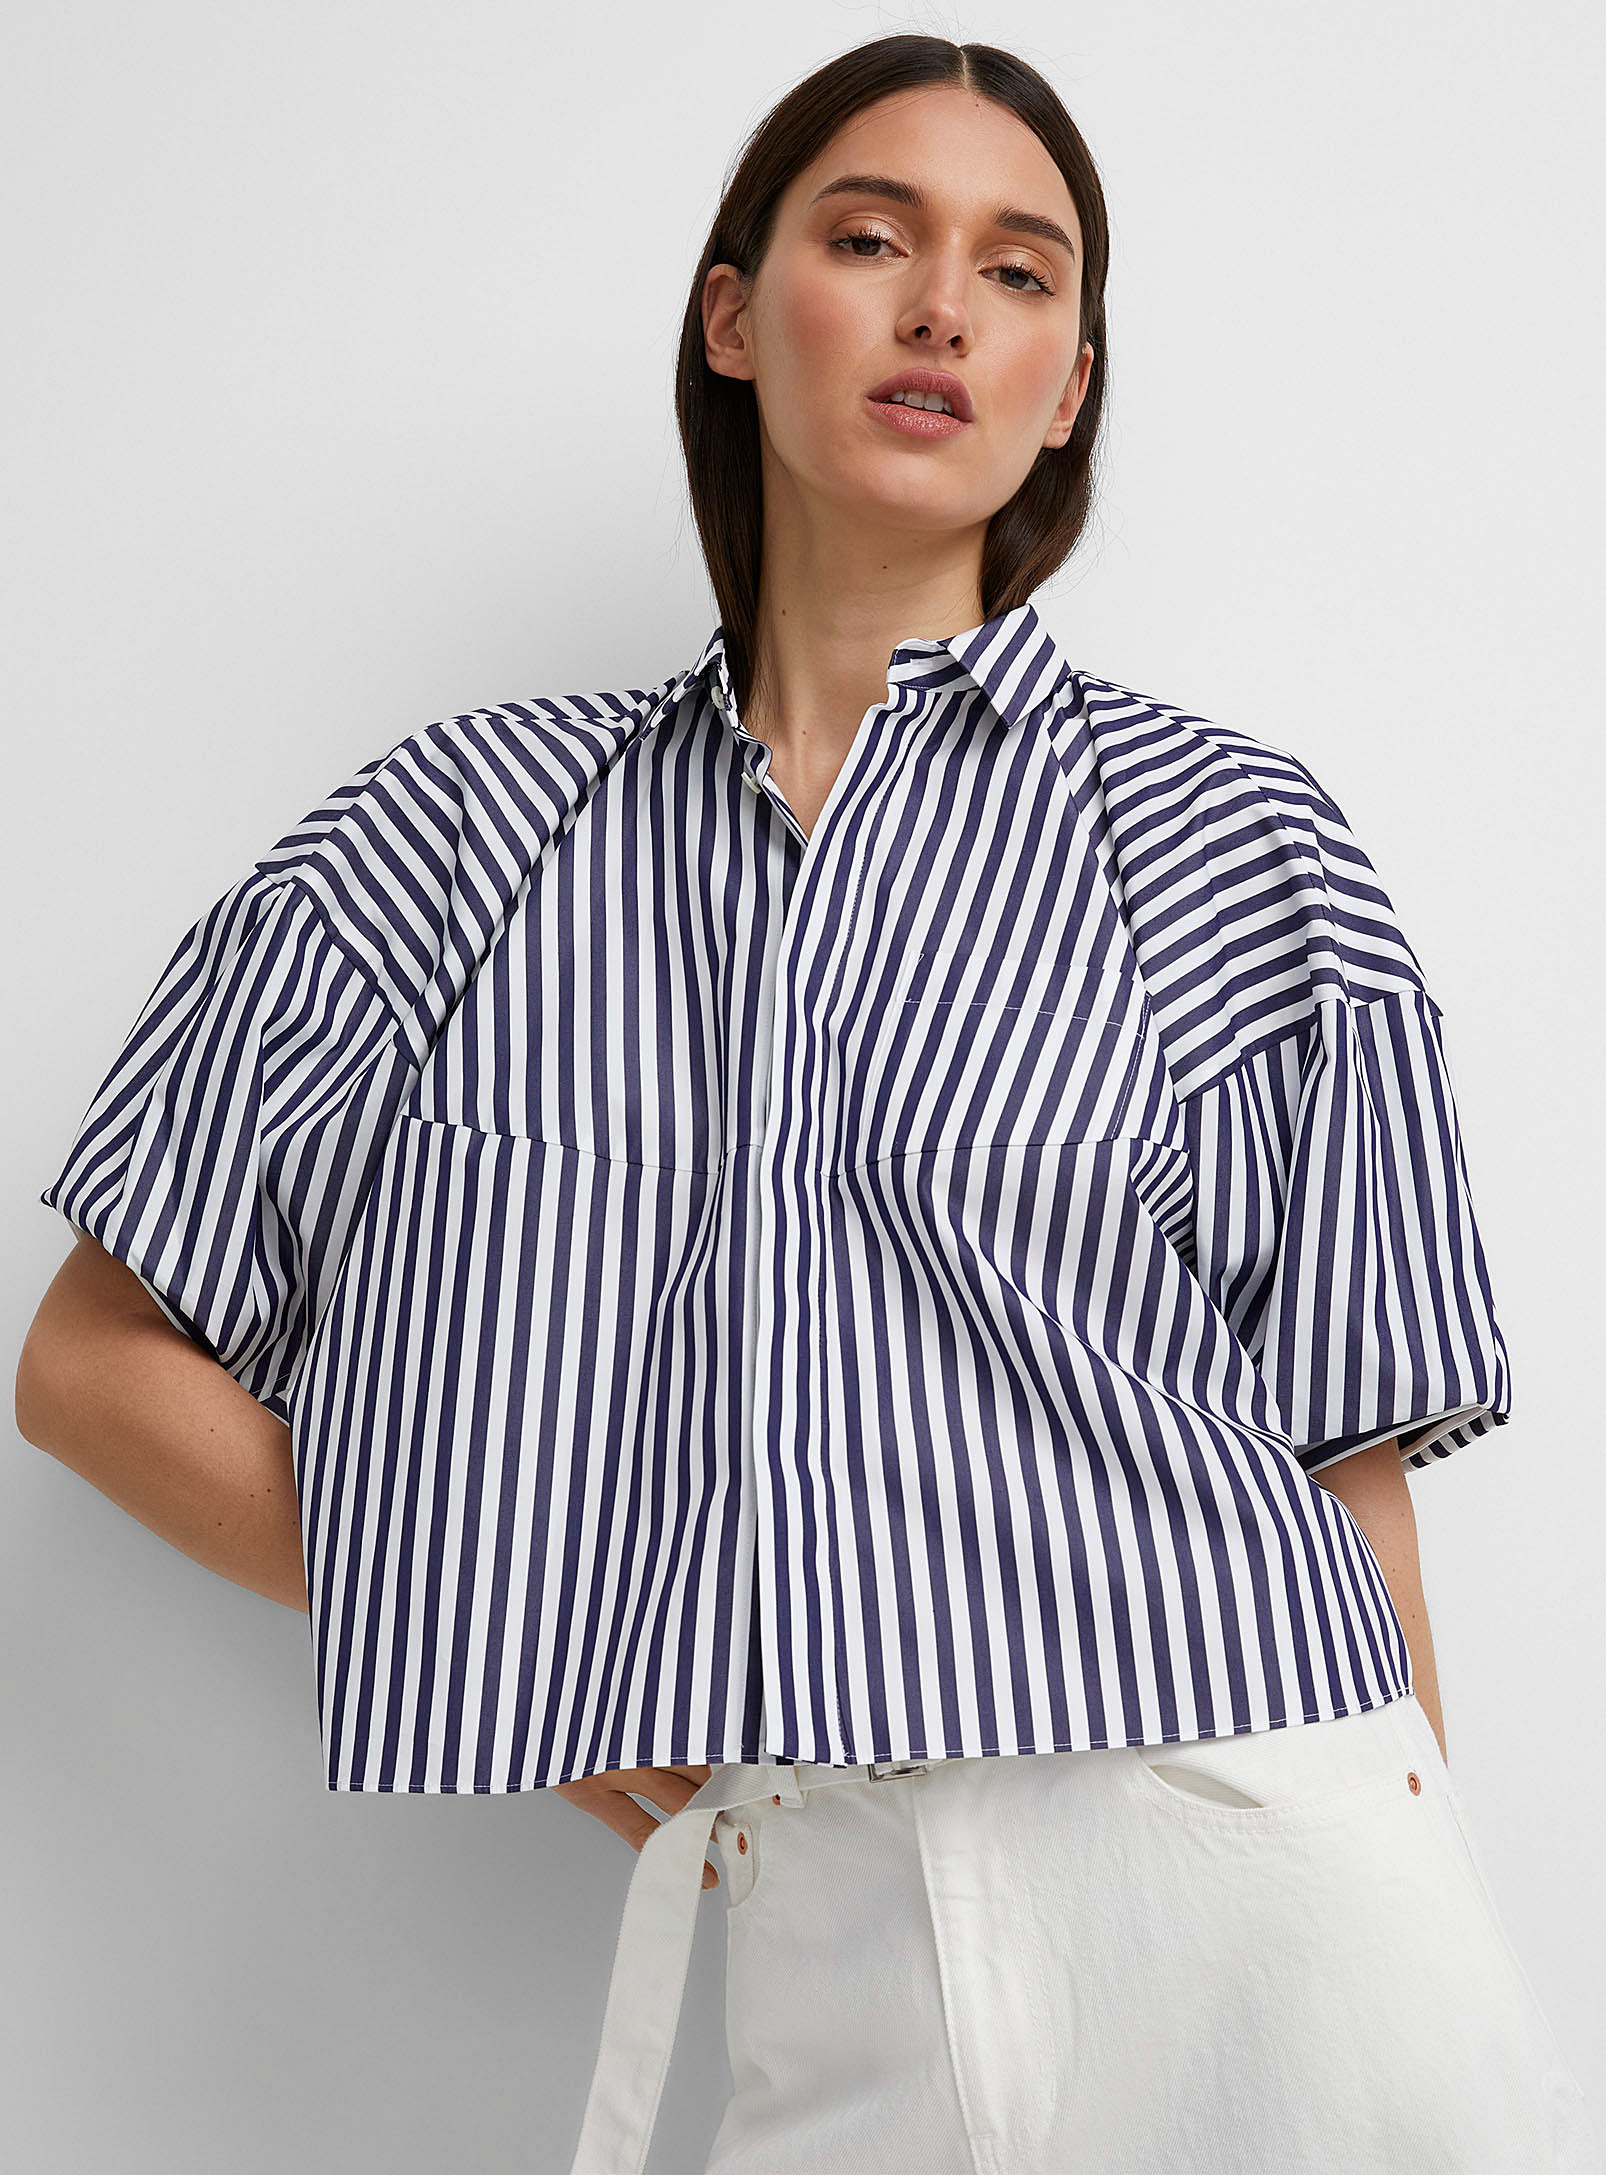 Sacai - Women's Puff-sleeve striped shirt